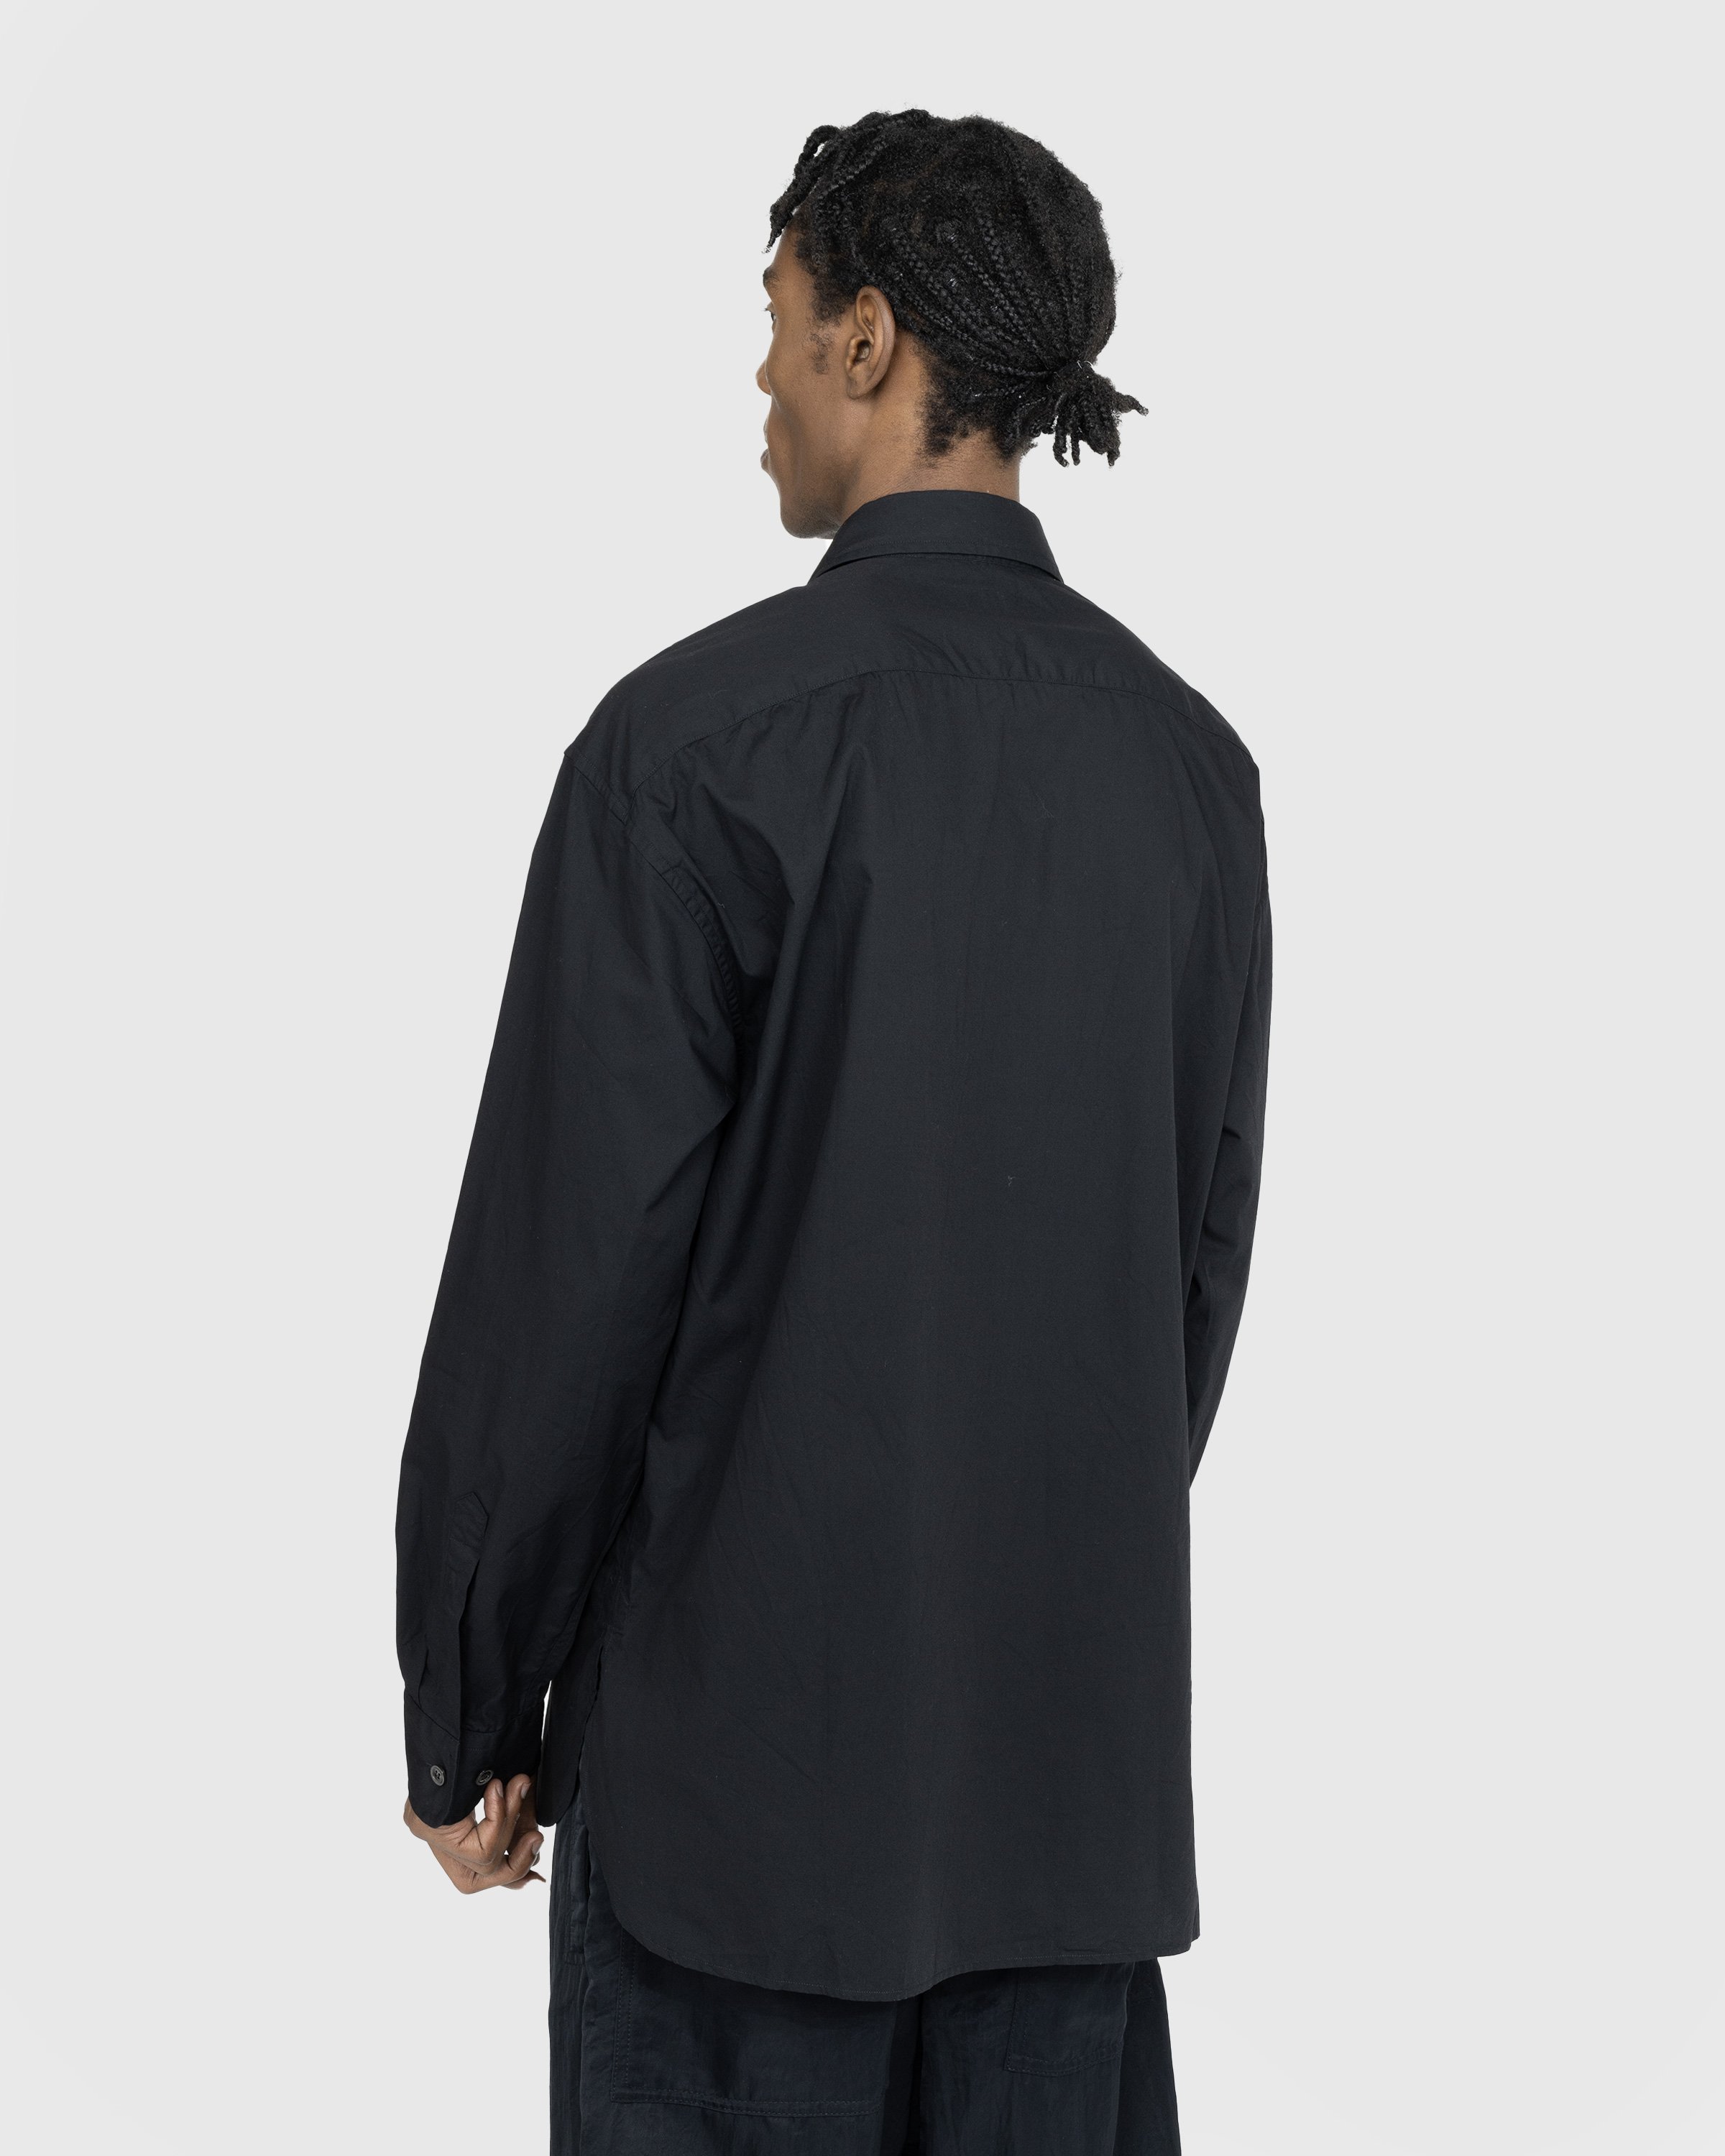 Dries van Noten - Croom Bis Shirt Black - Clothing - Black - Image 3